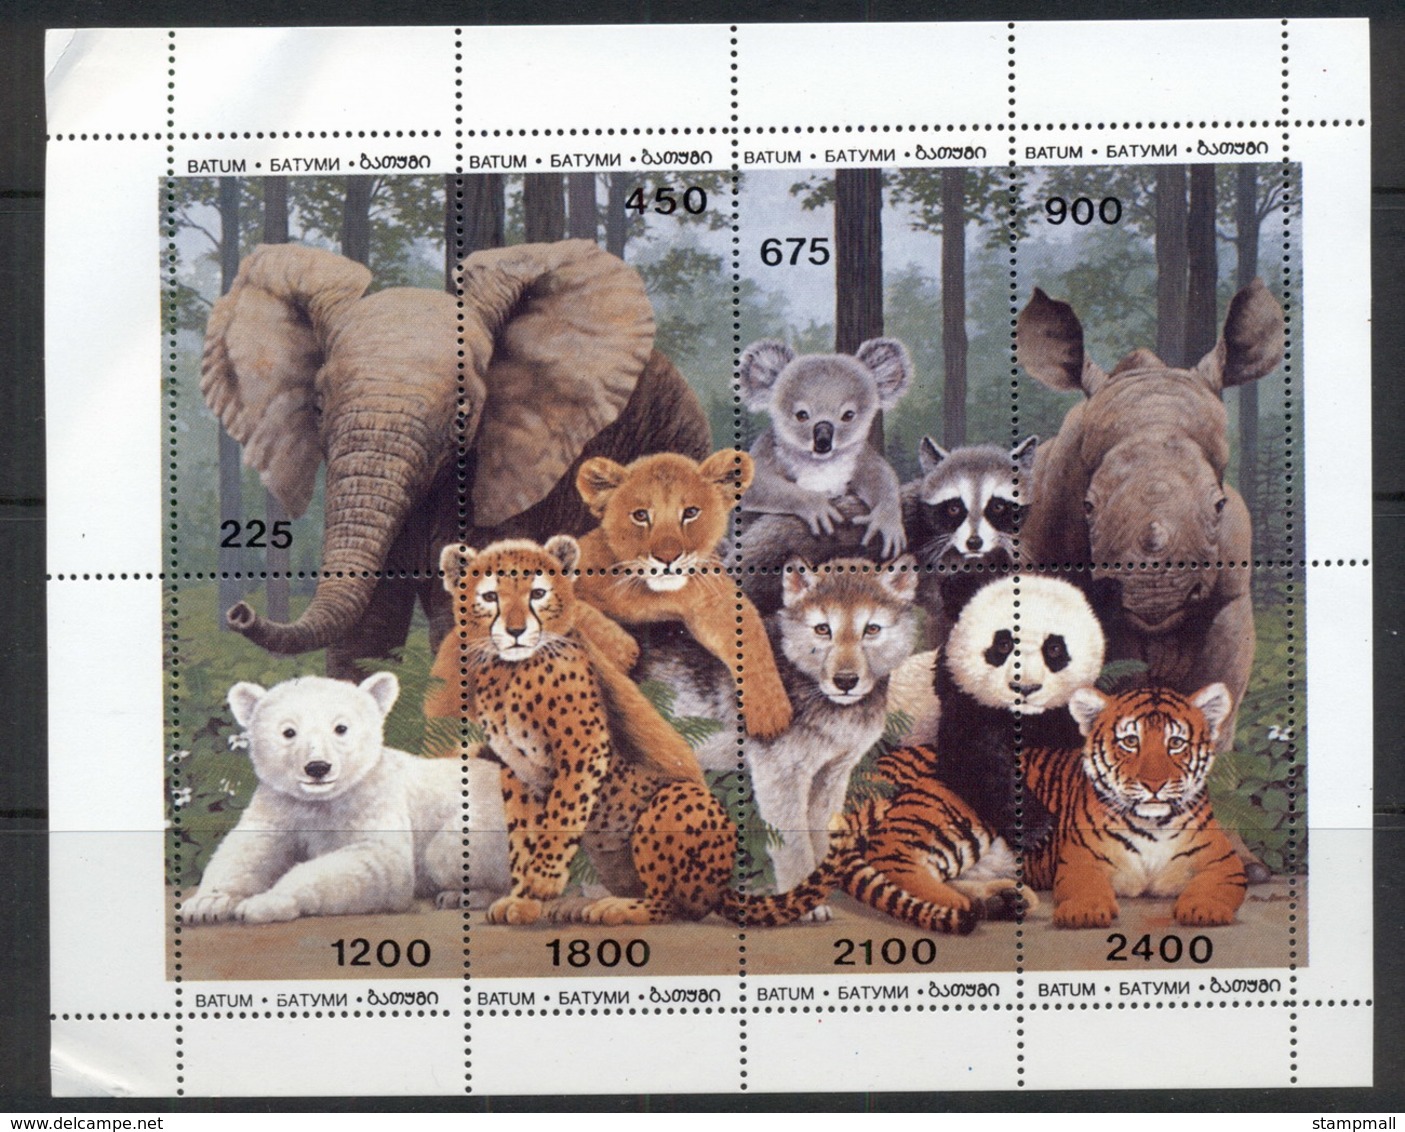 Batum 2000 C. Wildlife, Elephant, Koala MS MUH - Batum (1919-1920)